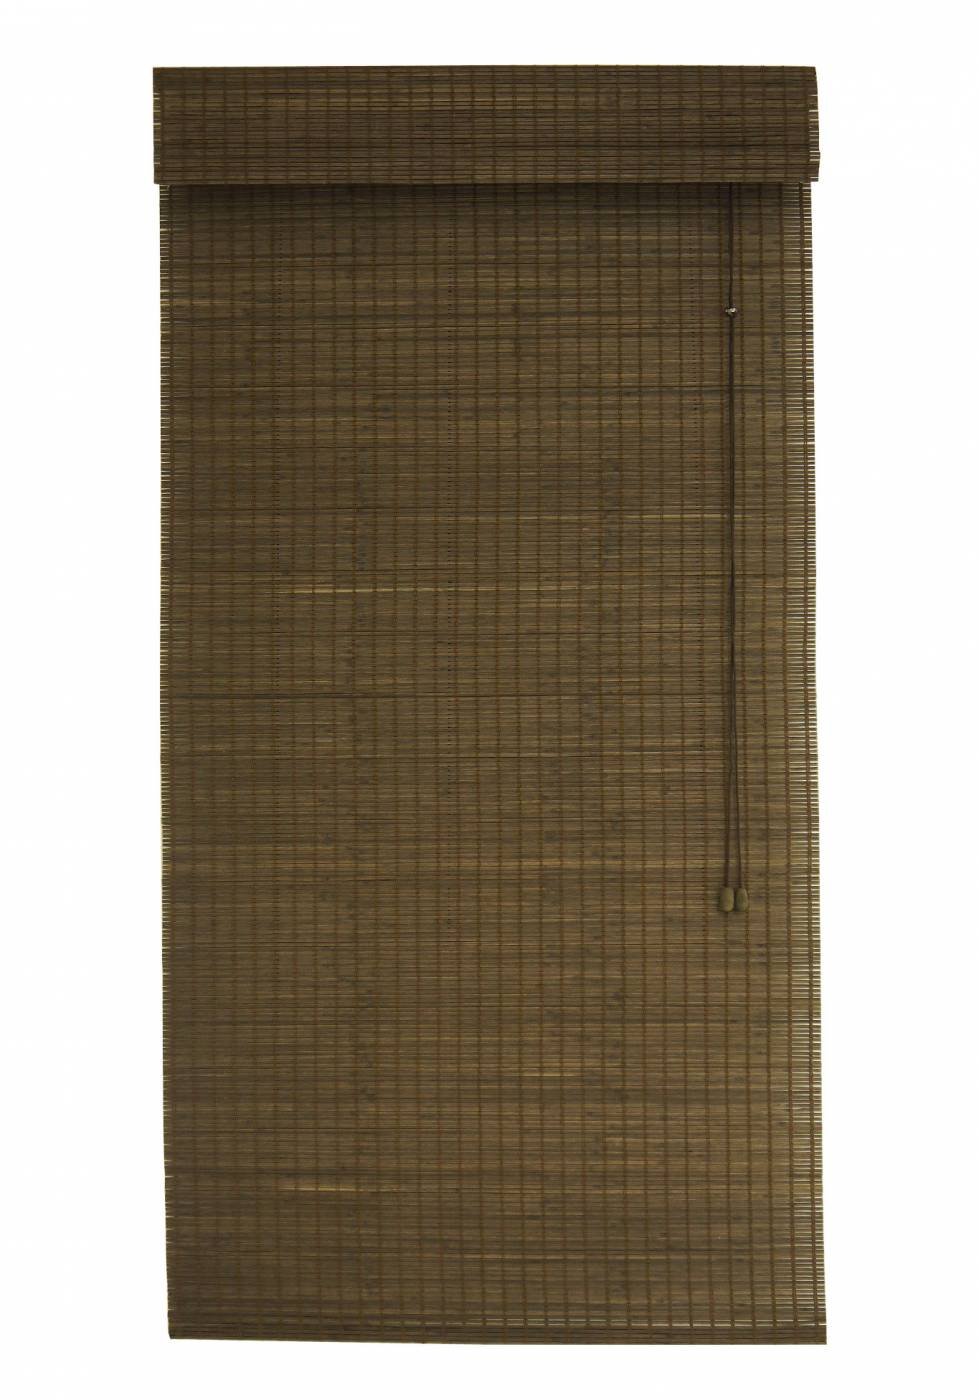 Persiana Bambu Romana Tabaco 80 (L) X 160 (A) cm Cortina Madeira C/ Bandô 0,80 x 1,60 Marrom Escuro - 9